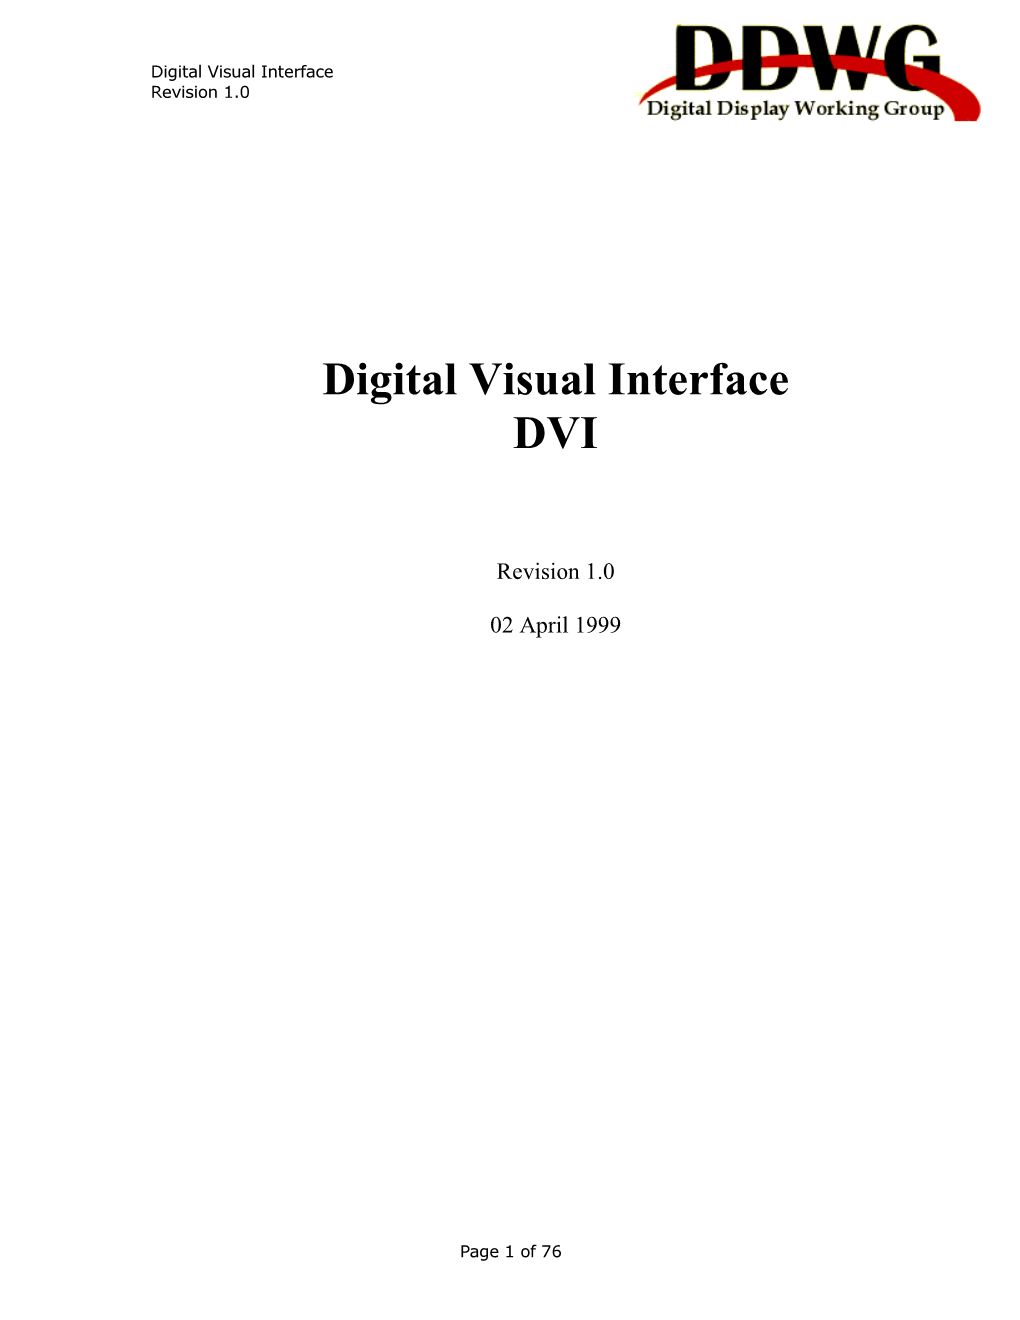 Digital Visual Interface Specification Version